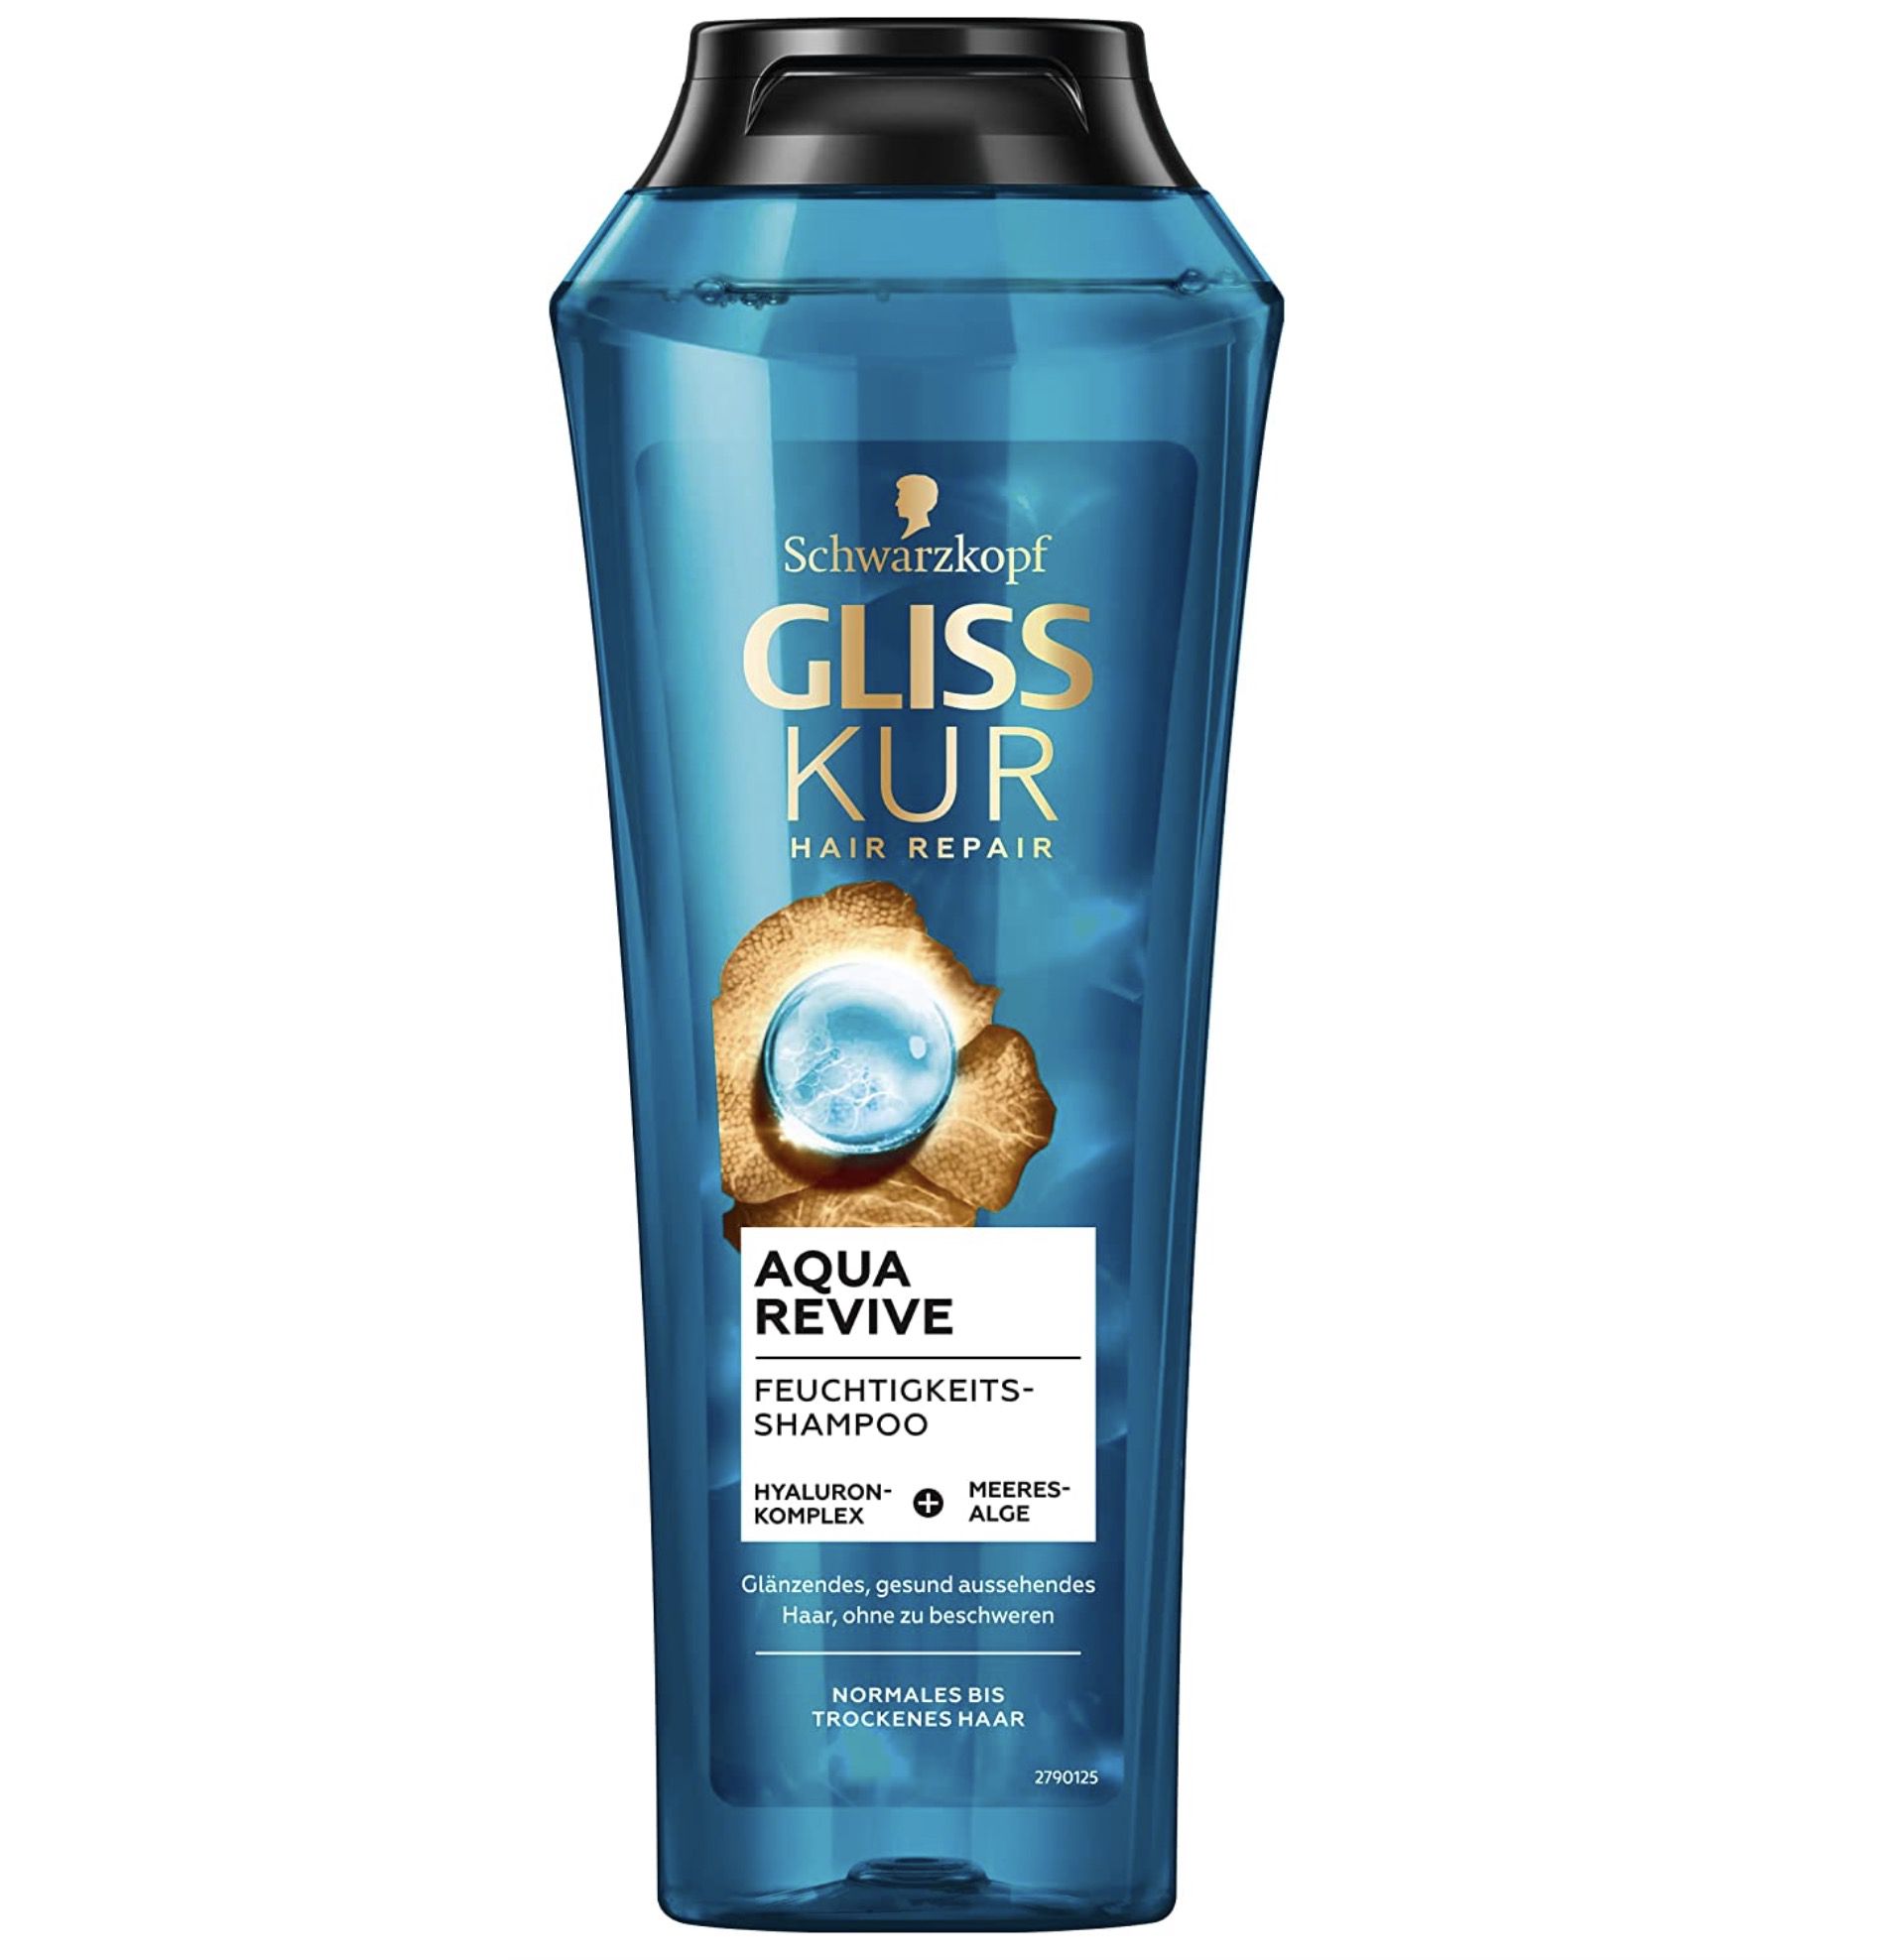 Gliss Kur Shampoo Aqua Revive für 1,27€ (statt 3€)